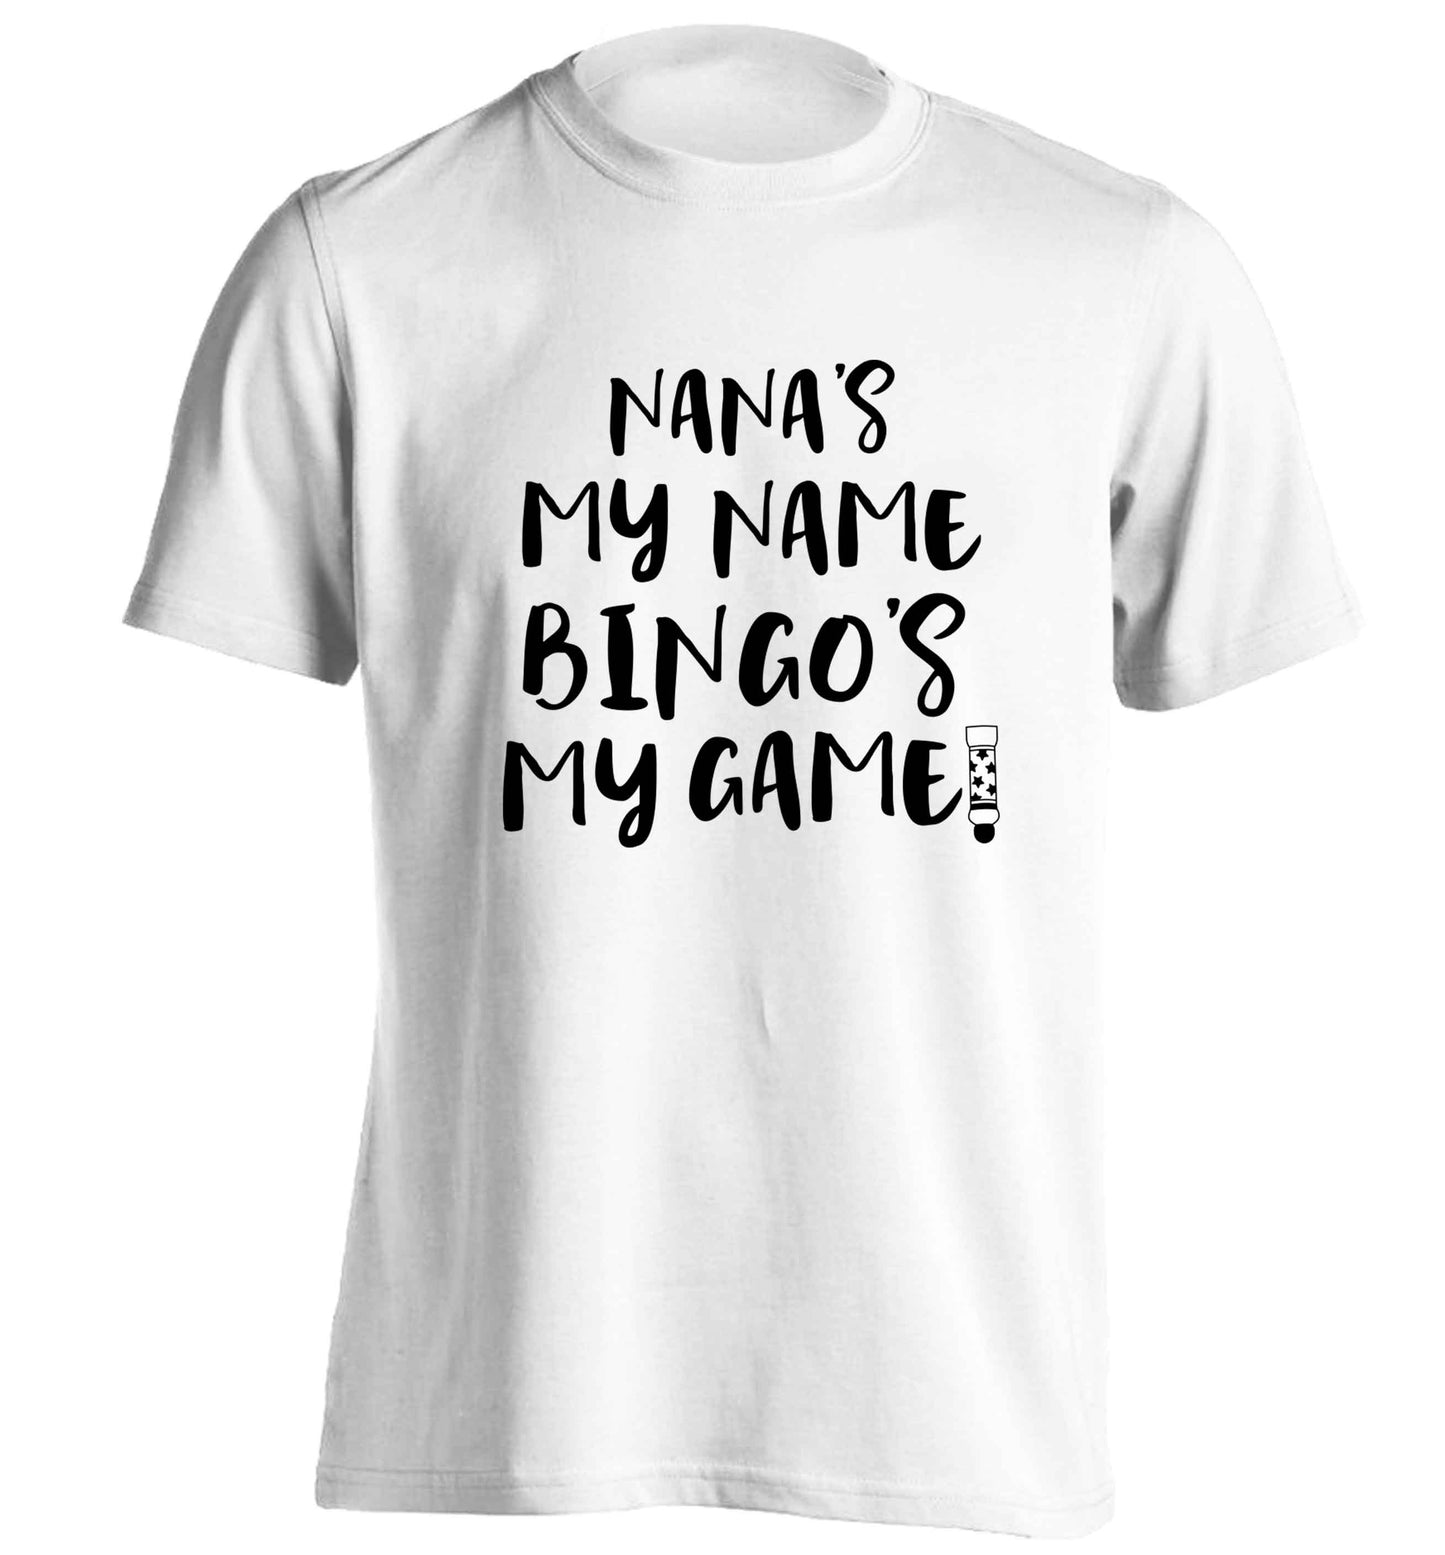 Nana's my name bingo's my game! adults unisex white Tshirt 2XL